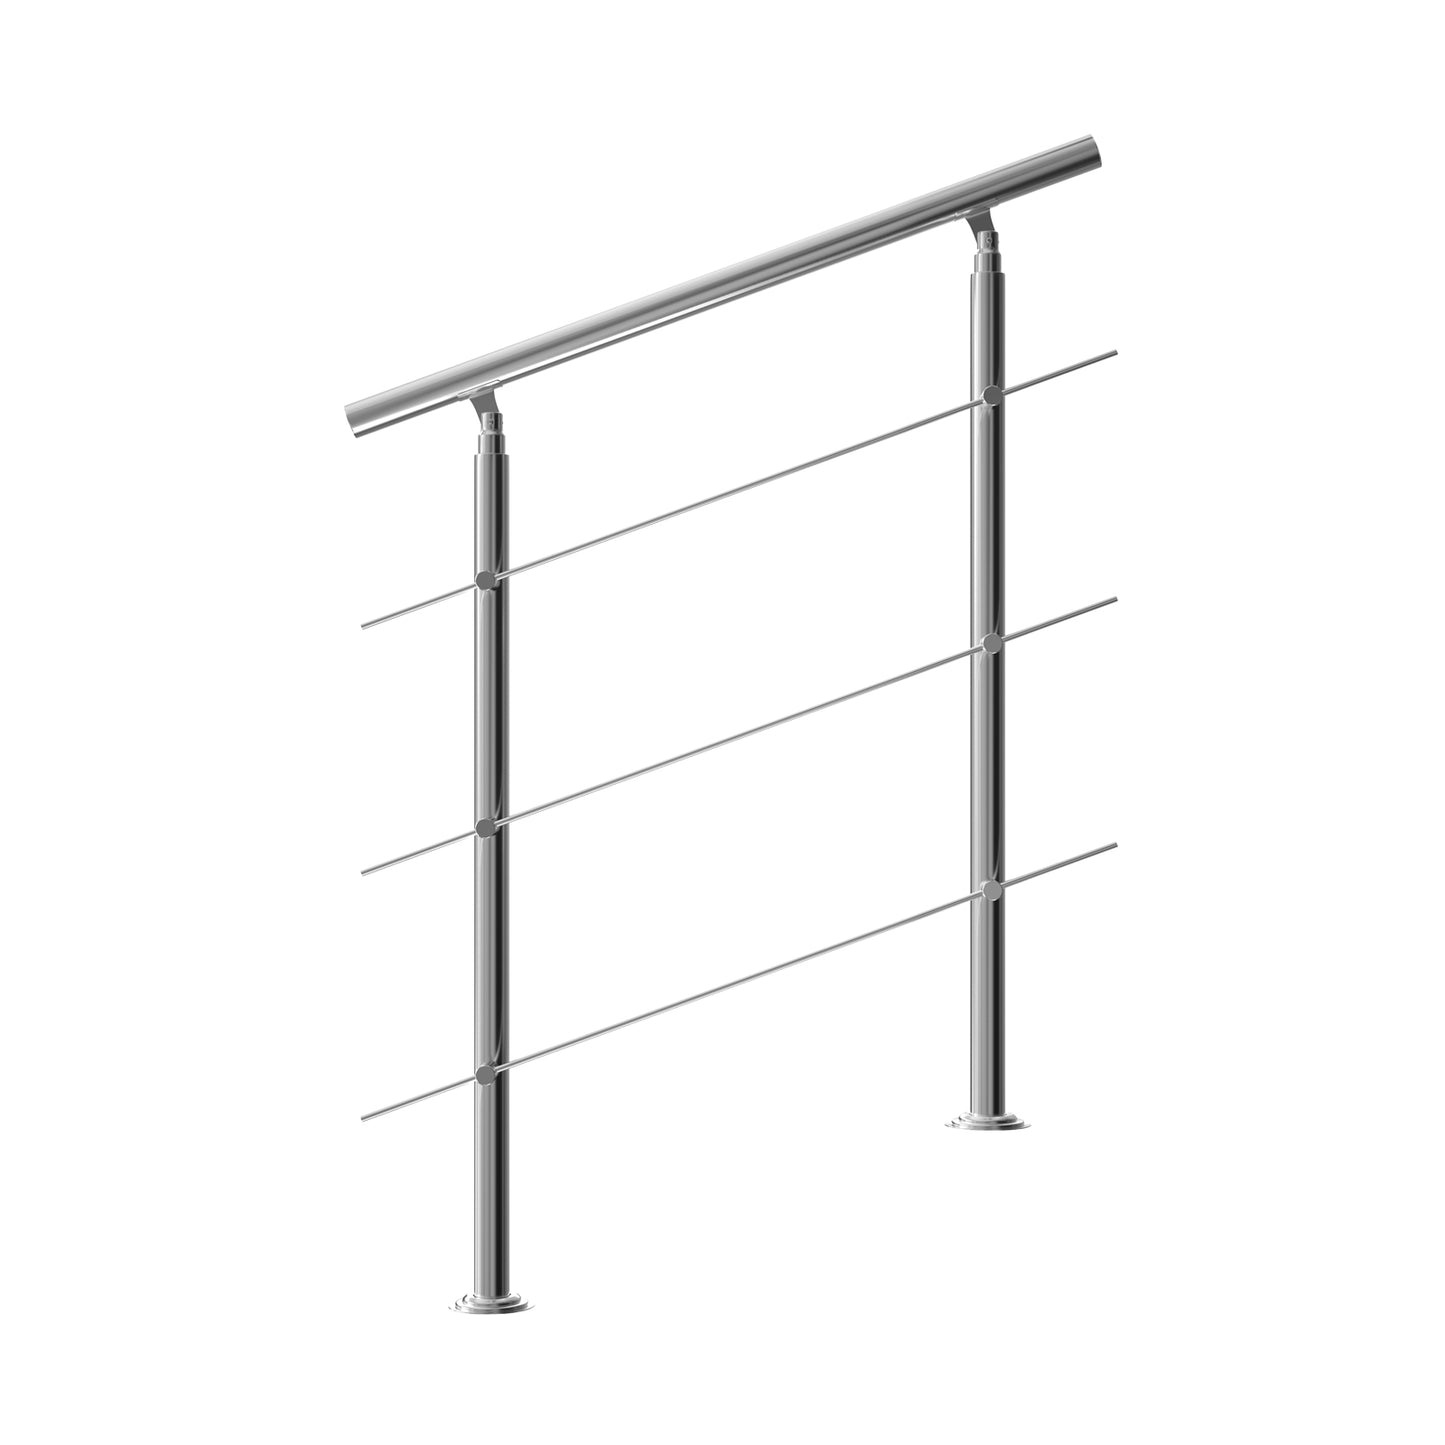 Nancy's Archbald Staircase Railing - Railing - Handrail - Stainless Steel - 100 cm